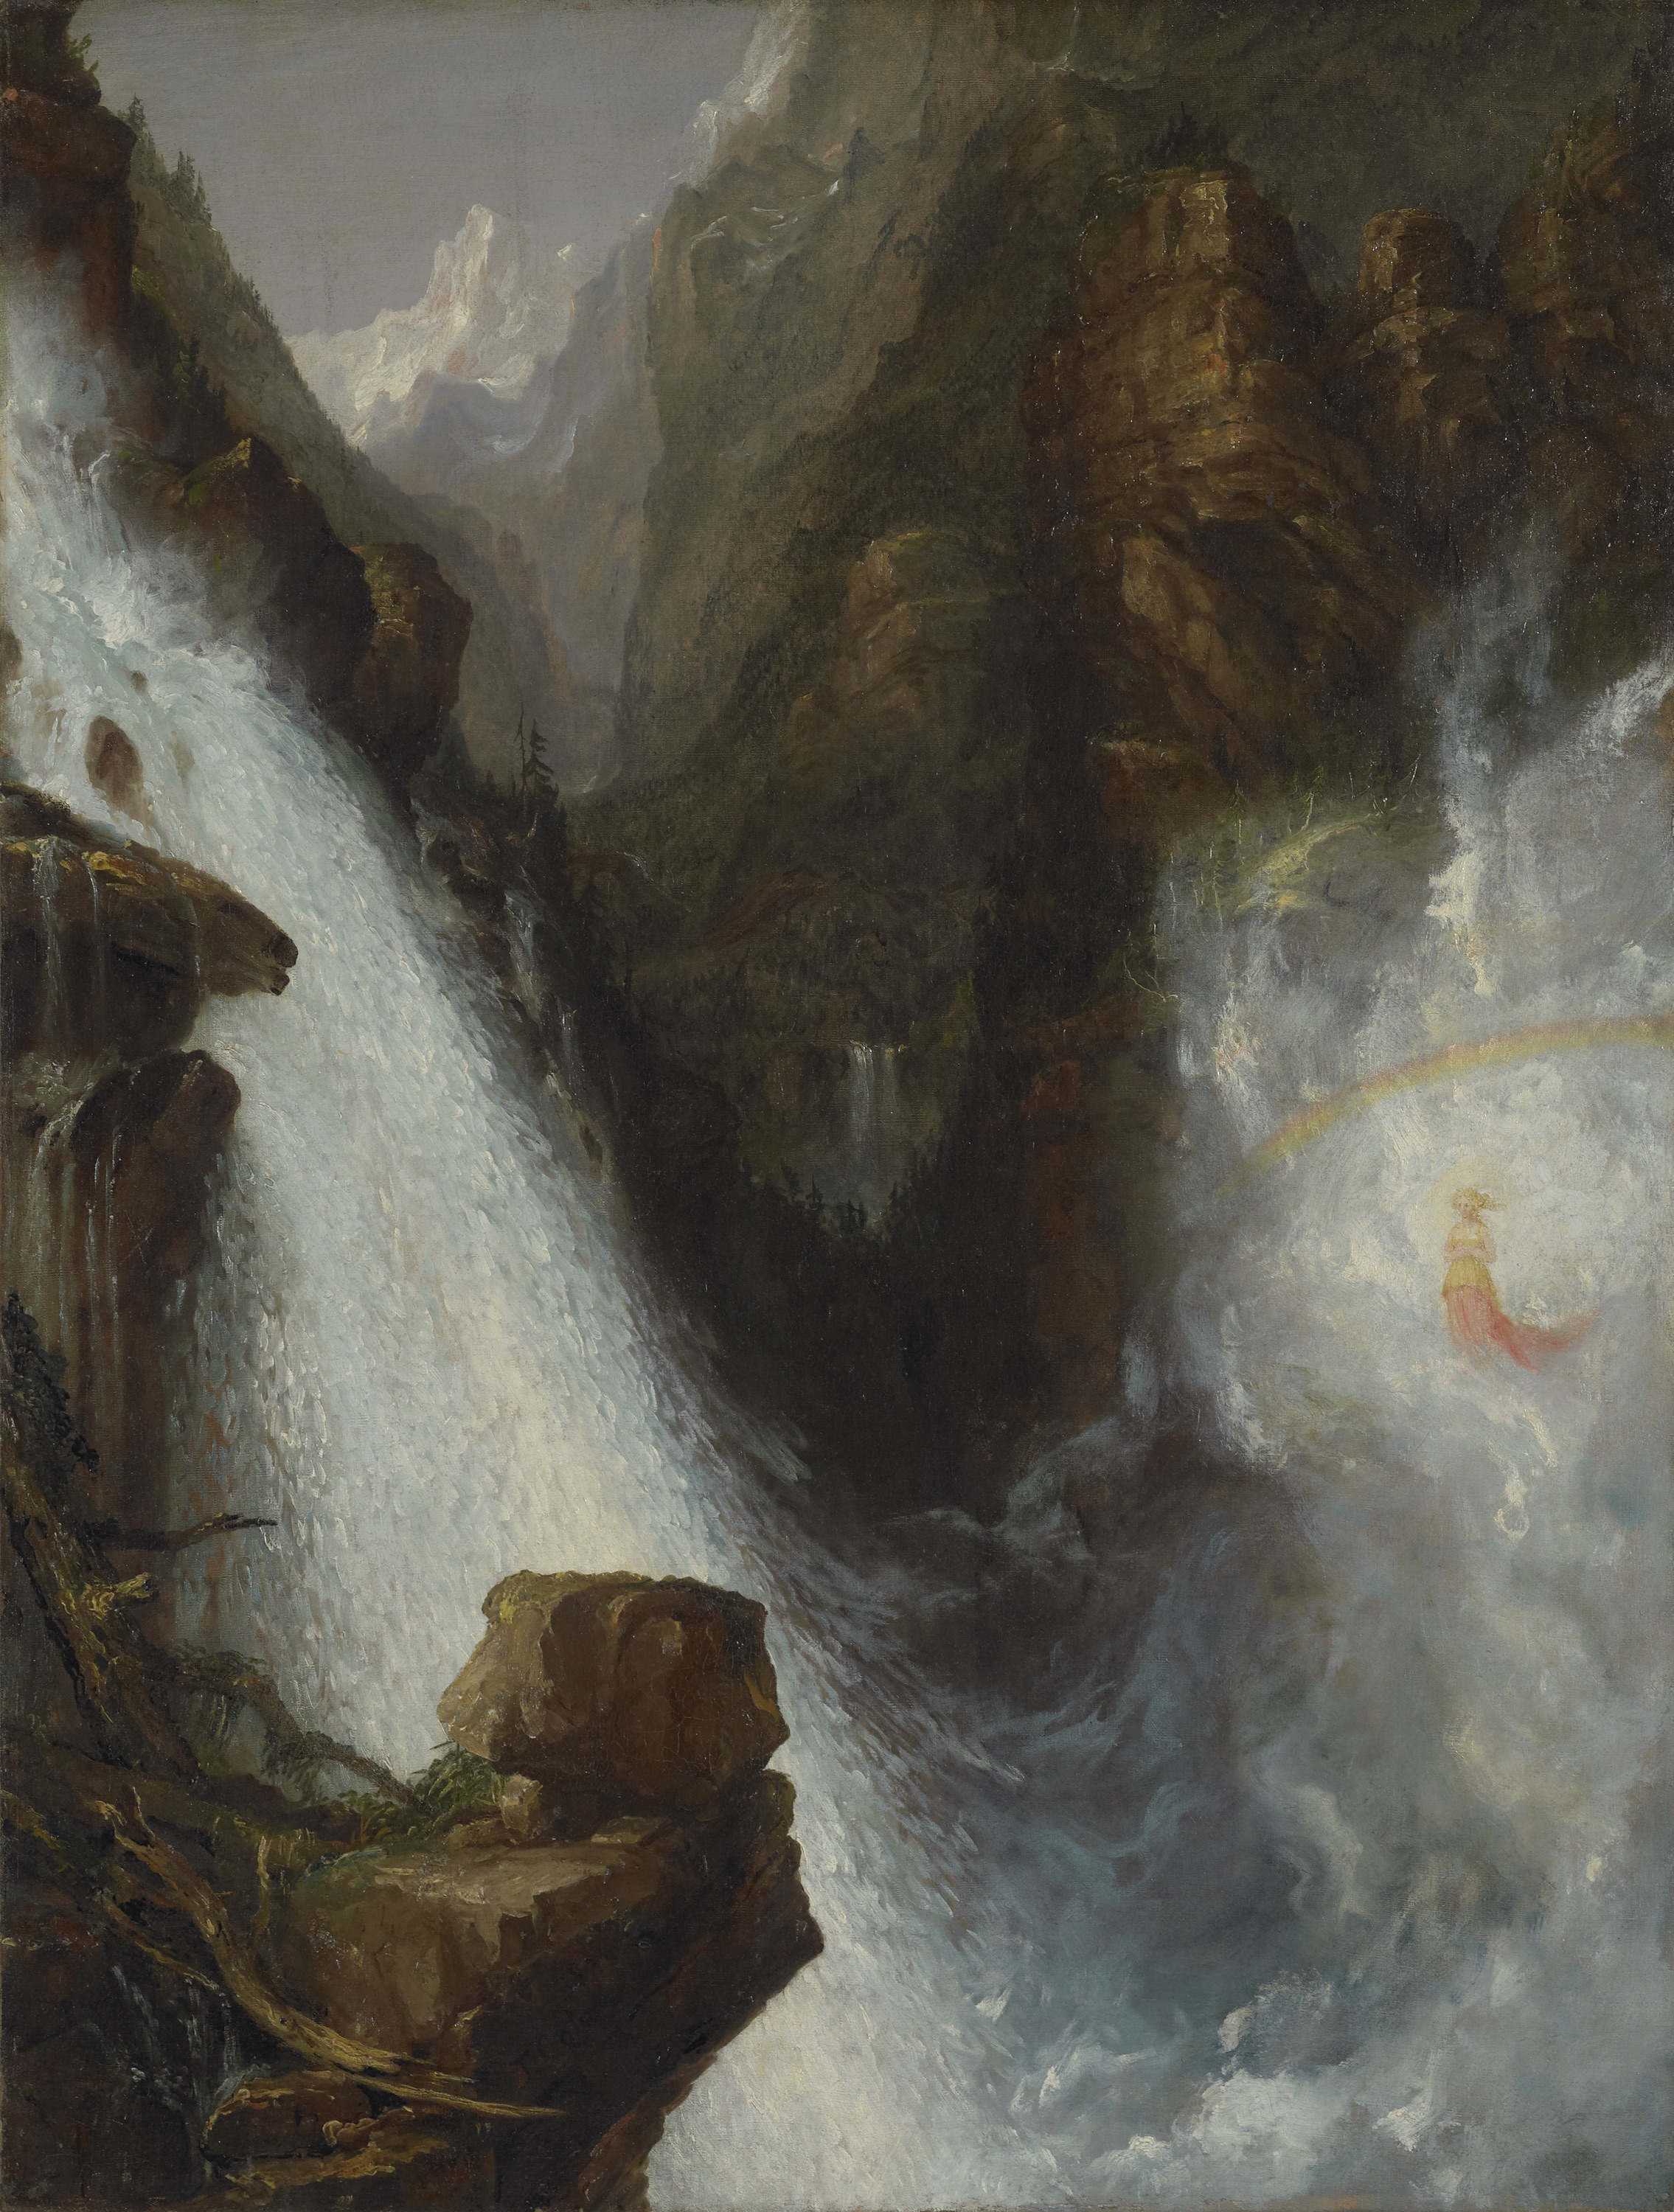 Jelenet Byron Manfréd című művéből by Thomas Cole - 1833 - 127 x 96,5 cm 